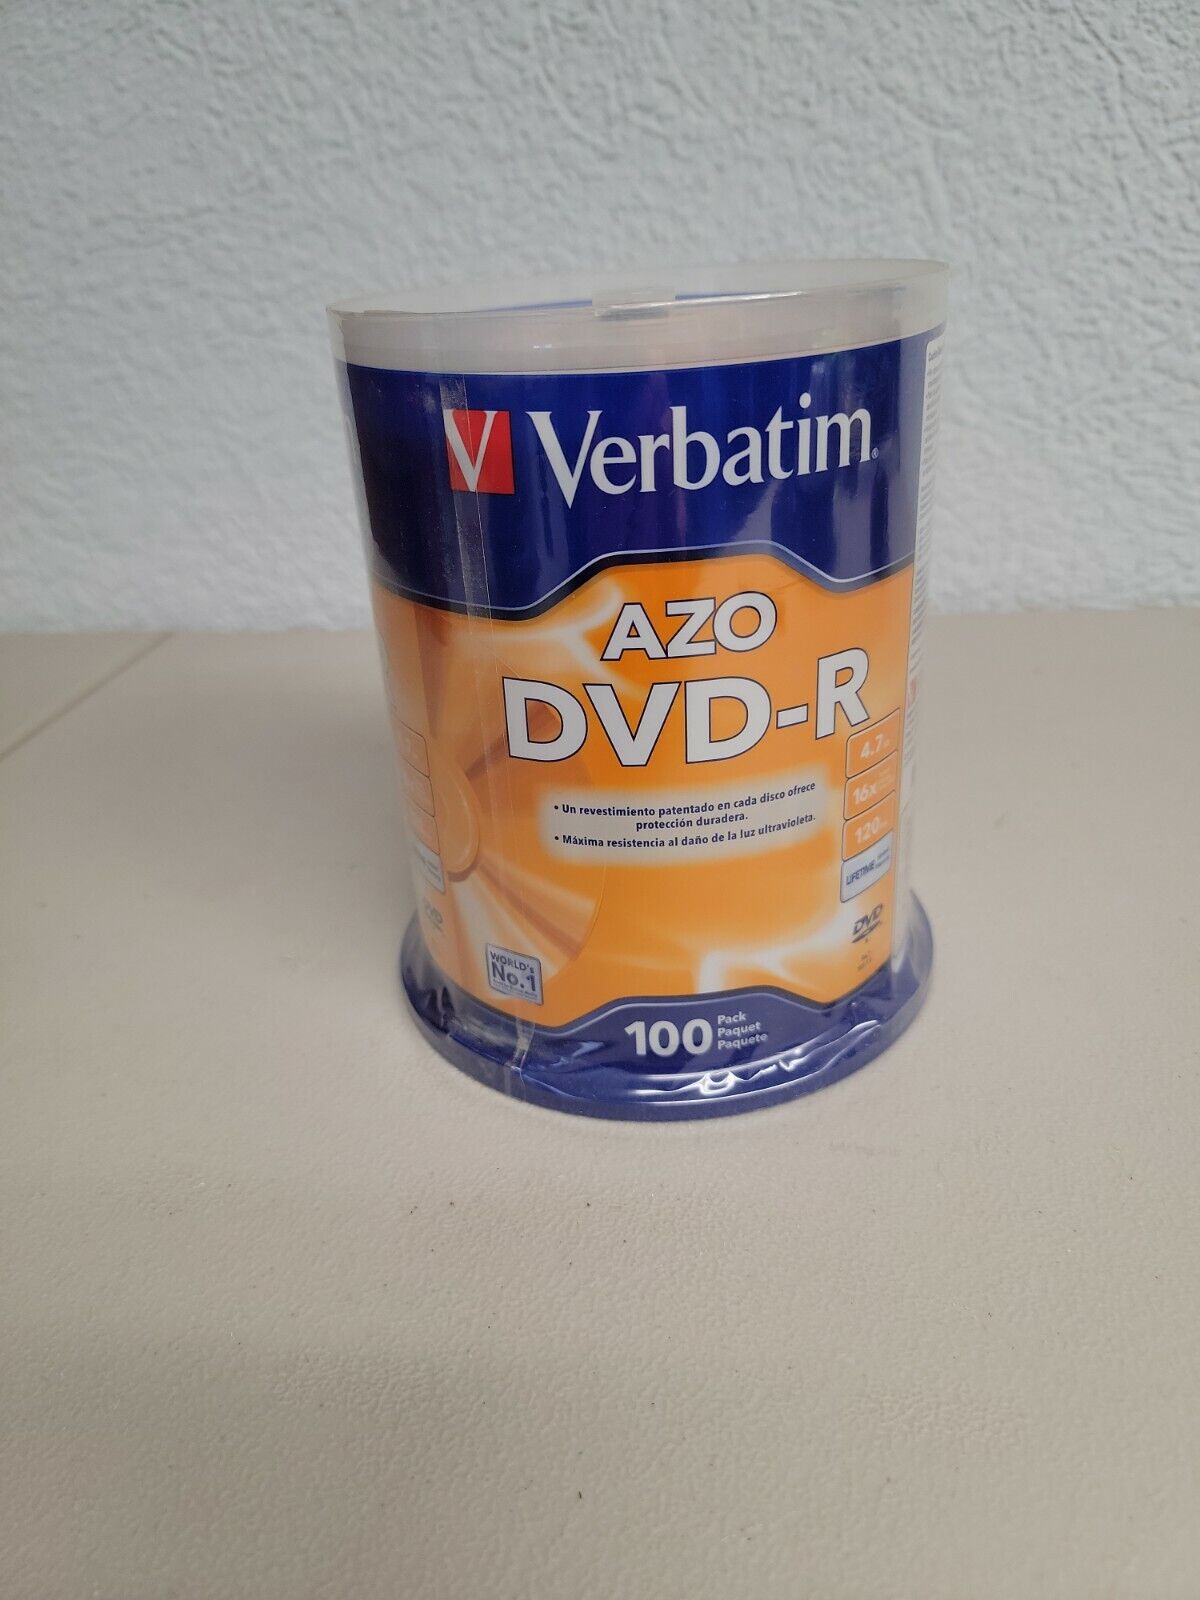 Verbatim 95102 4.7GB DVD-Rs (100-ct Spindle)